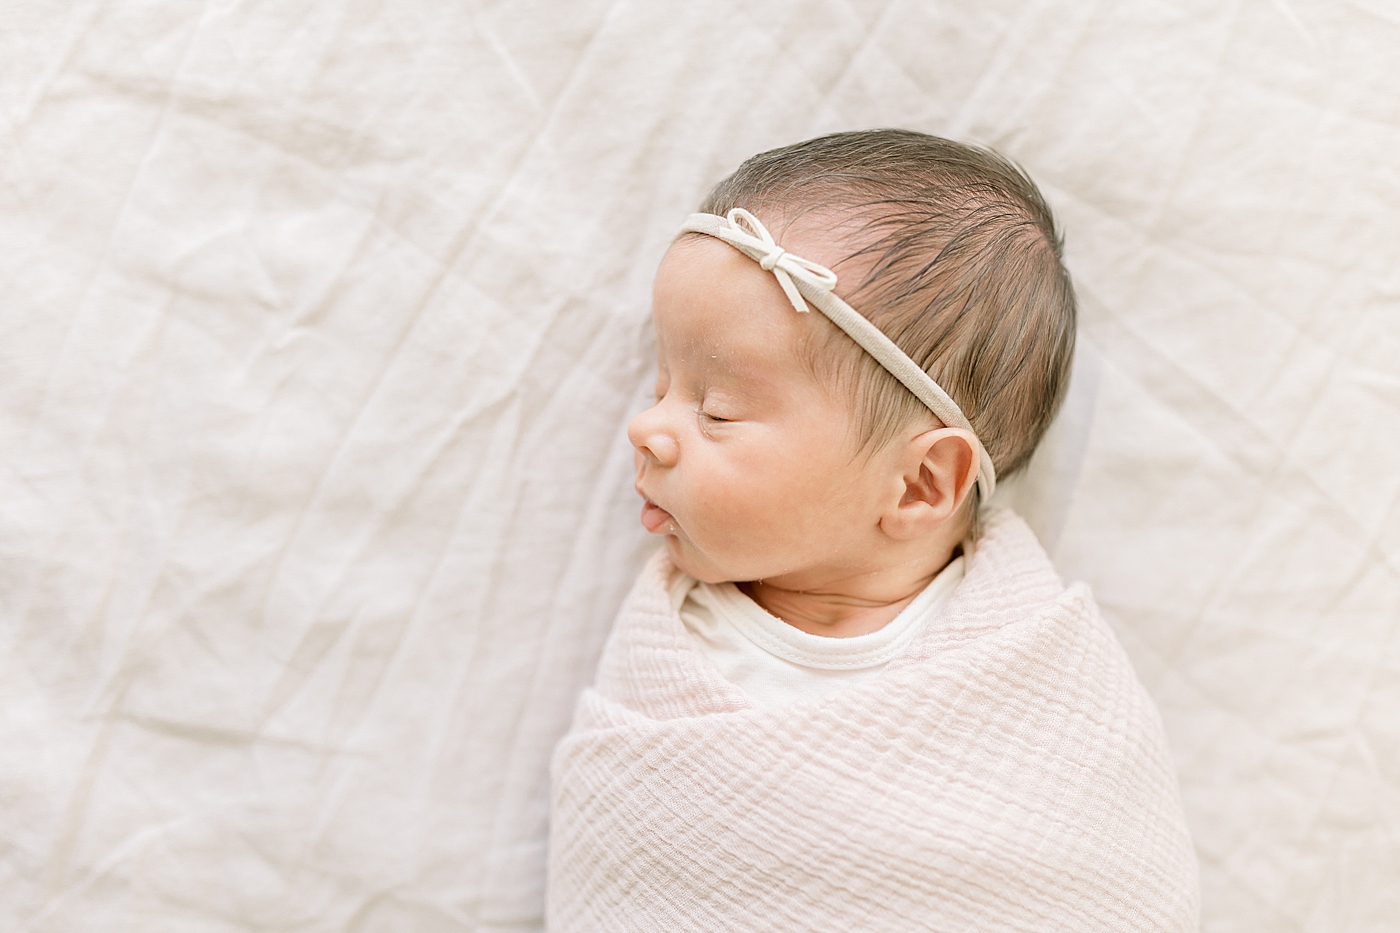 Sleeping newborn baby girl in a white blanket | Image by Caitlyn Motycka